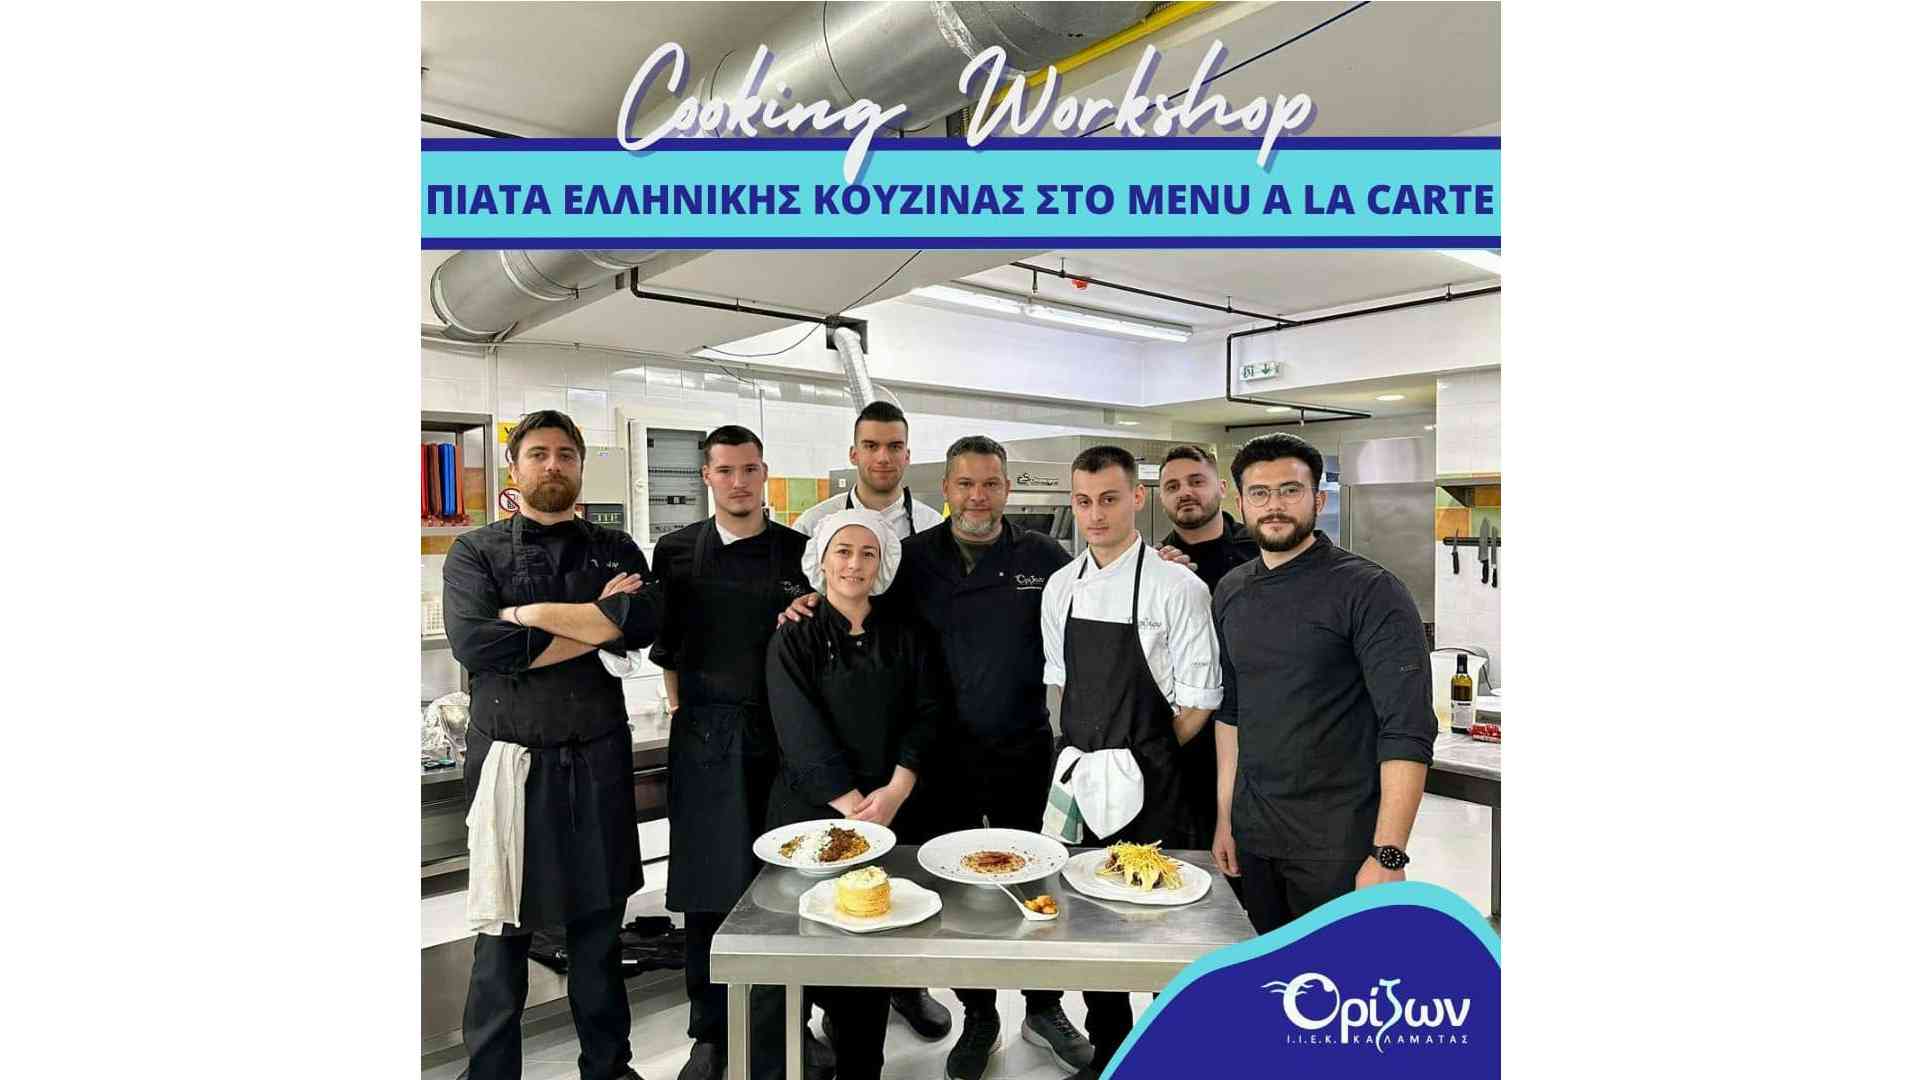 Cooking Workshop - Πιάτα ελληνικής κουζίνας στο menu à la carte